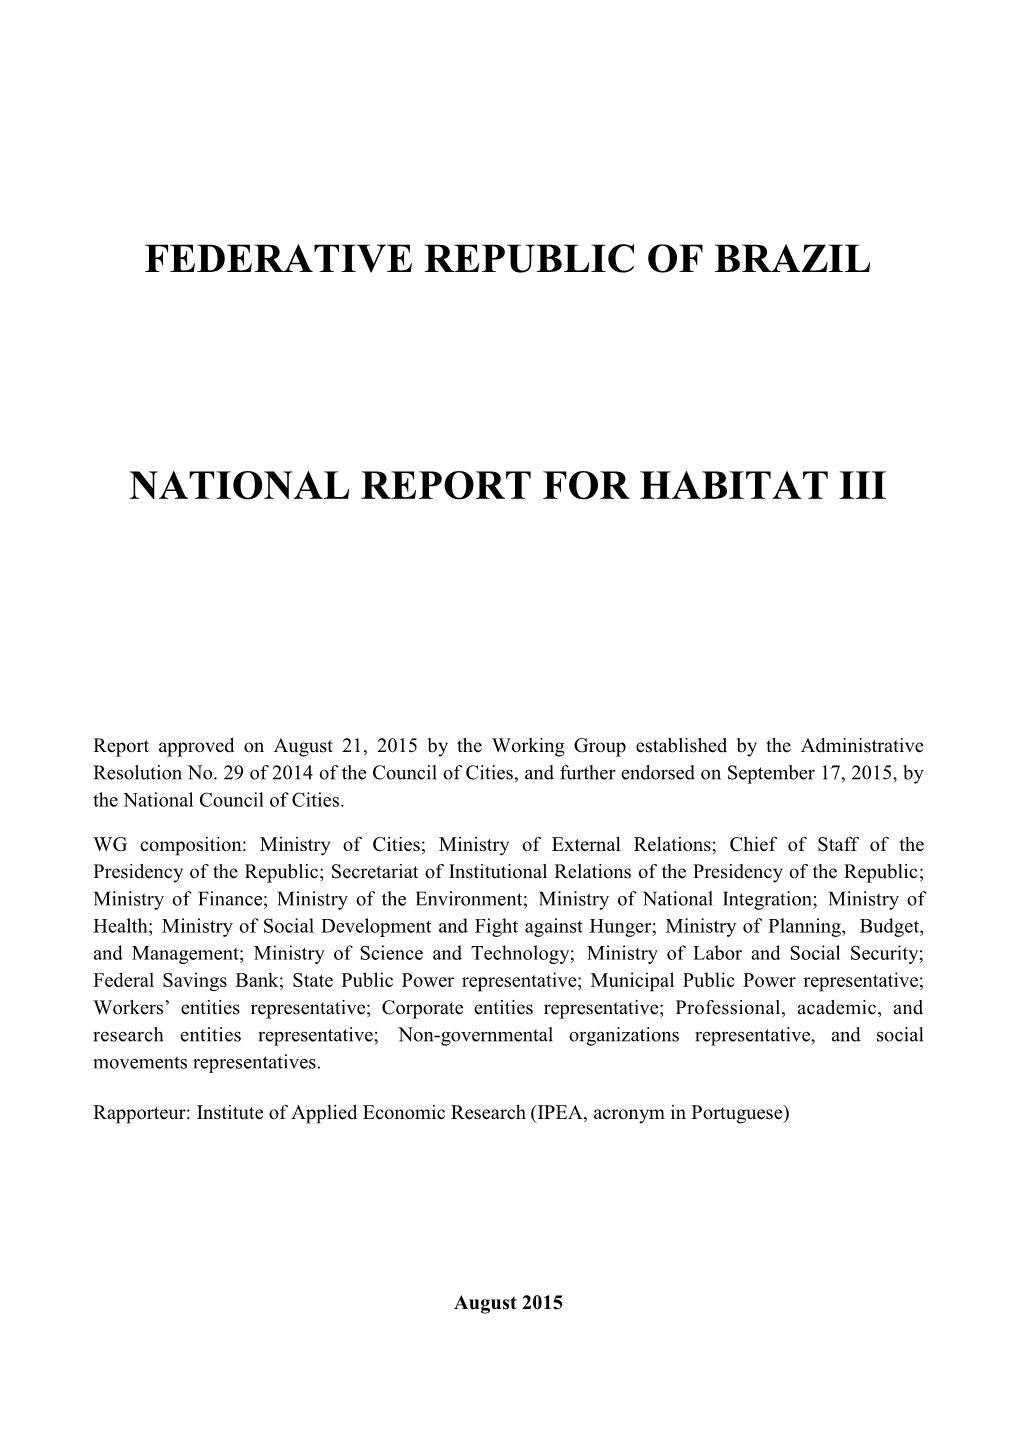 Federative Republic of Brazil National Report for Habitat